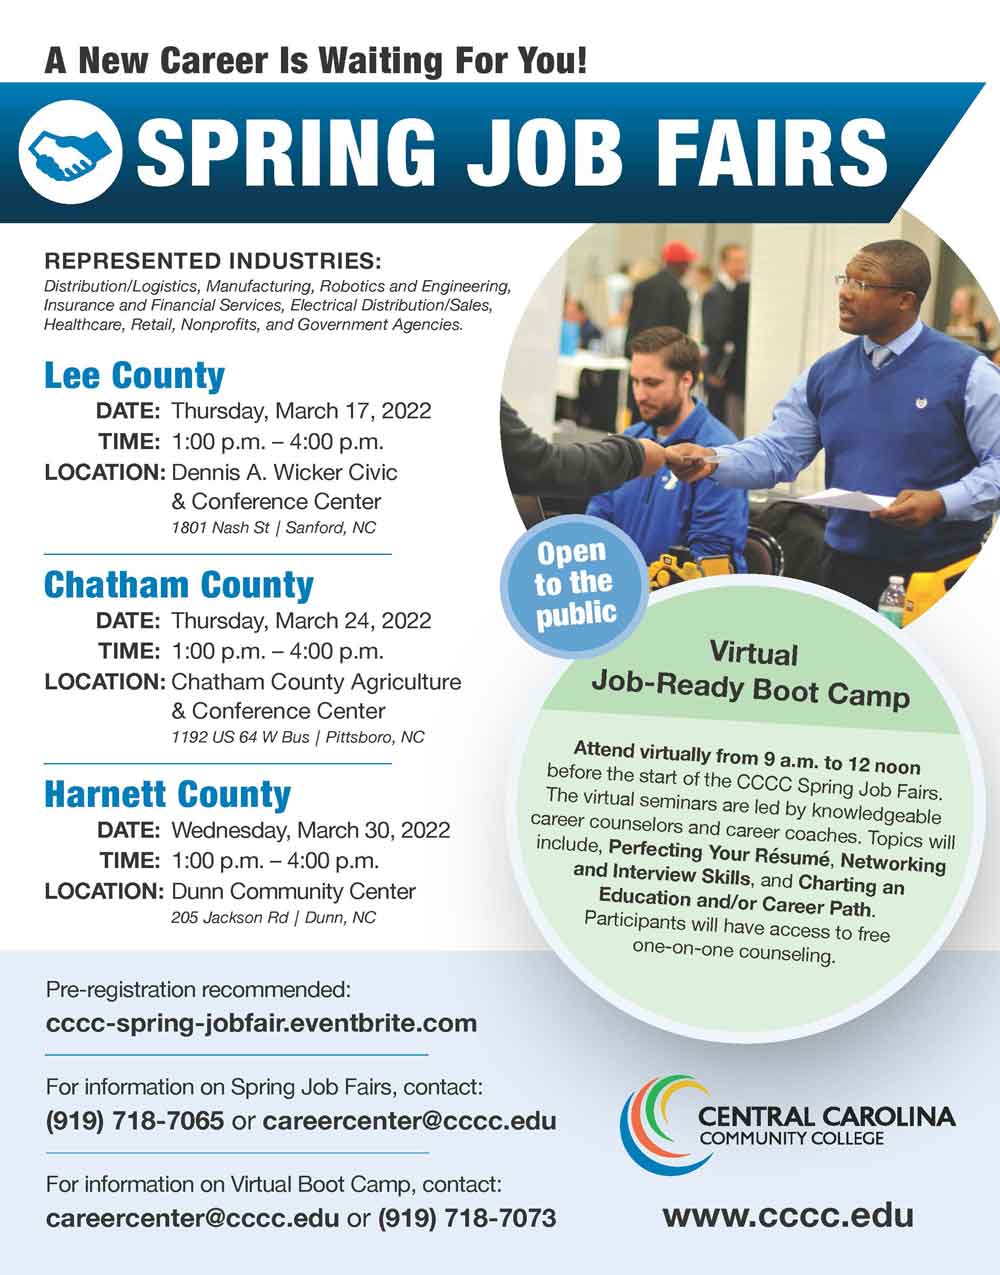 CCCC will host spring job fairs